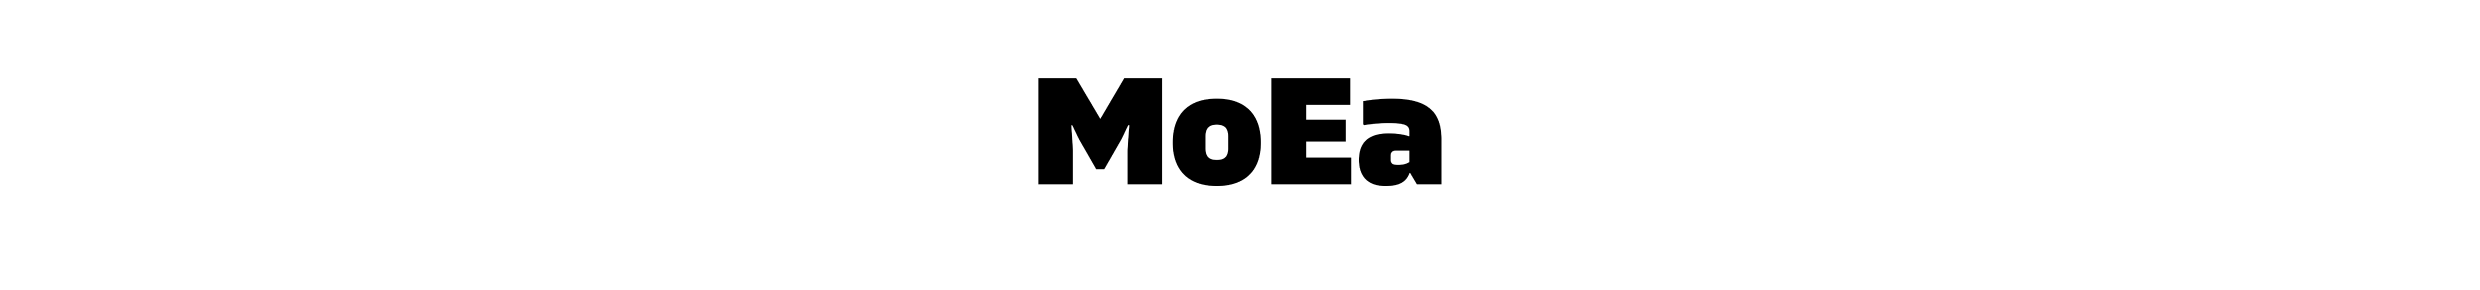 MOEA logo